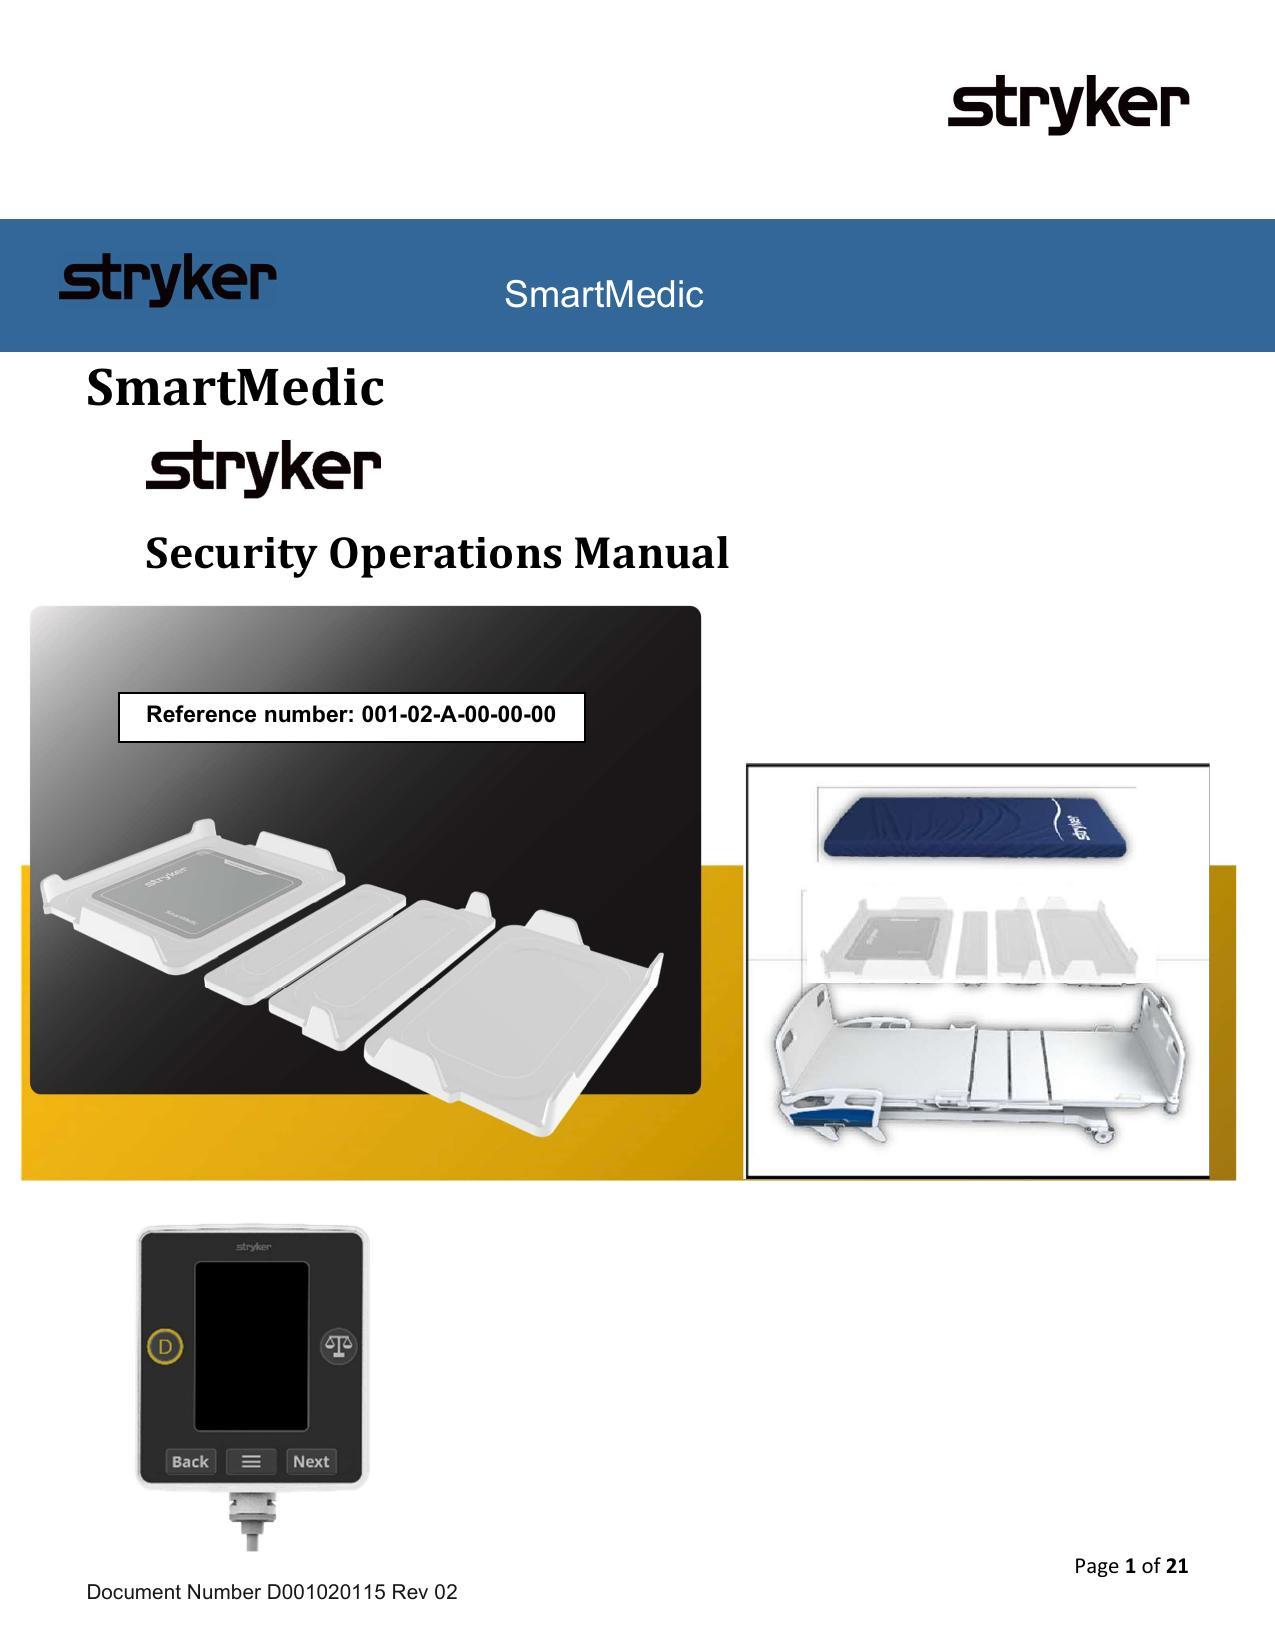 smartmedic-stryker-security-operations-manual.pdf